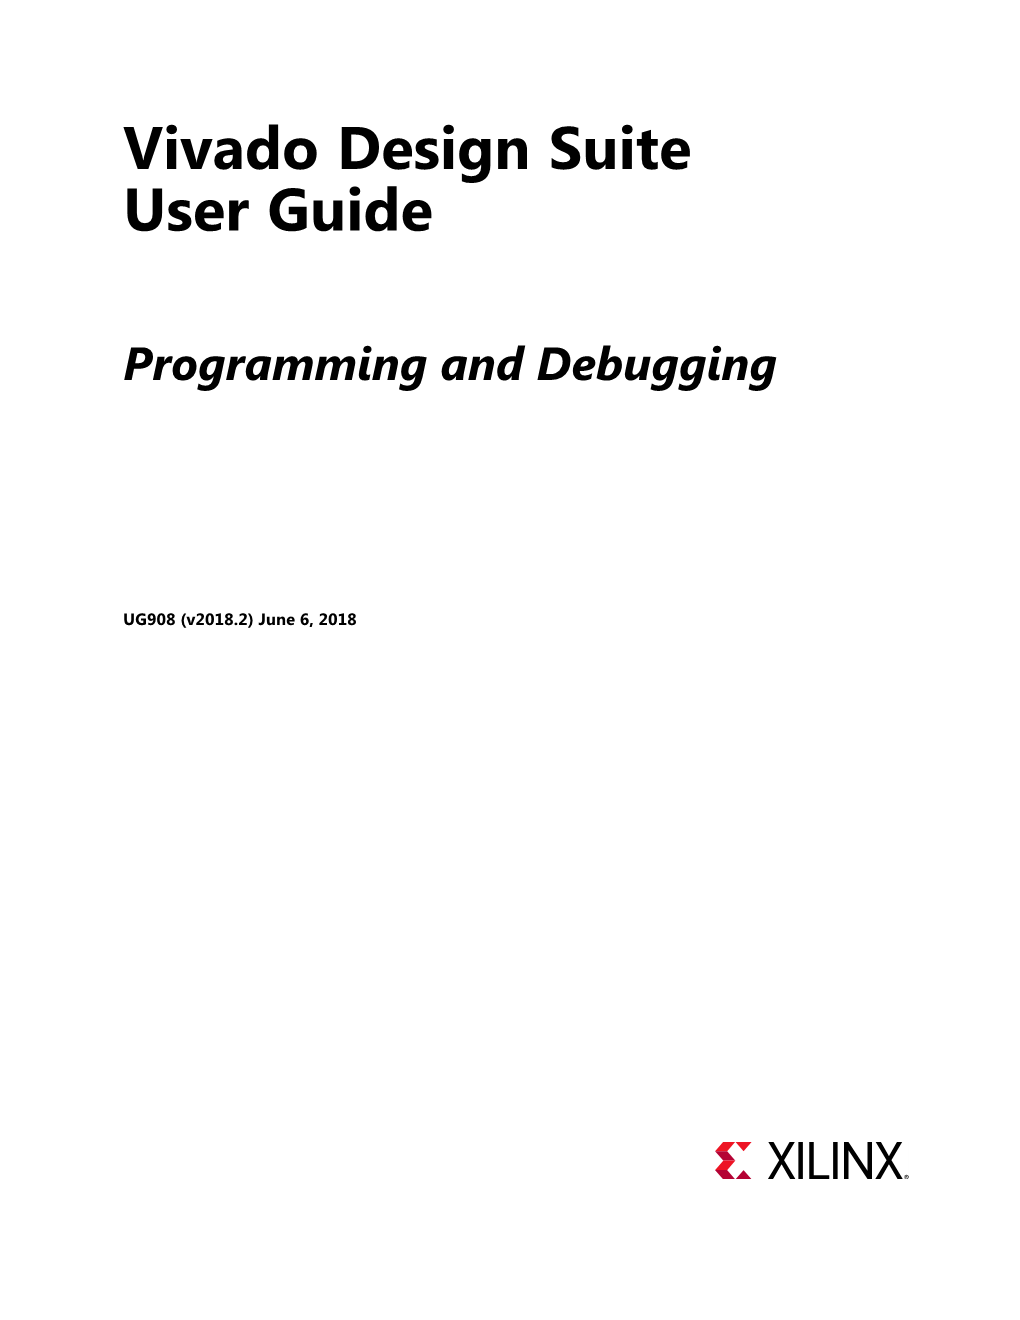 Vivado Design Suite User Guide: Programming and Debugging